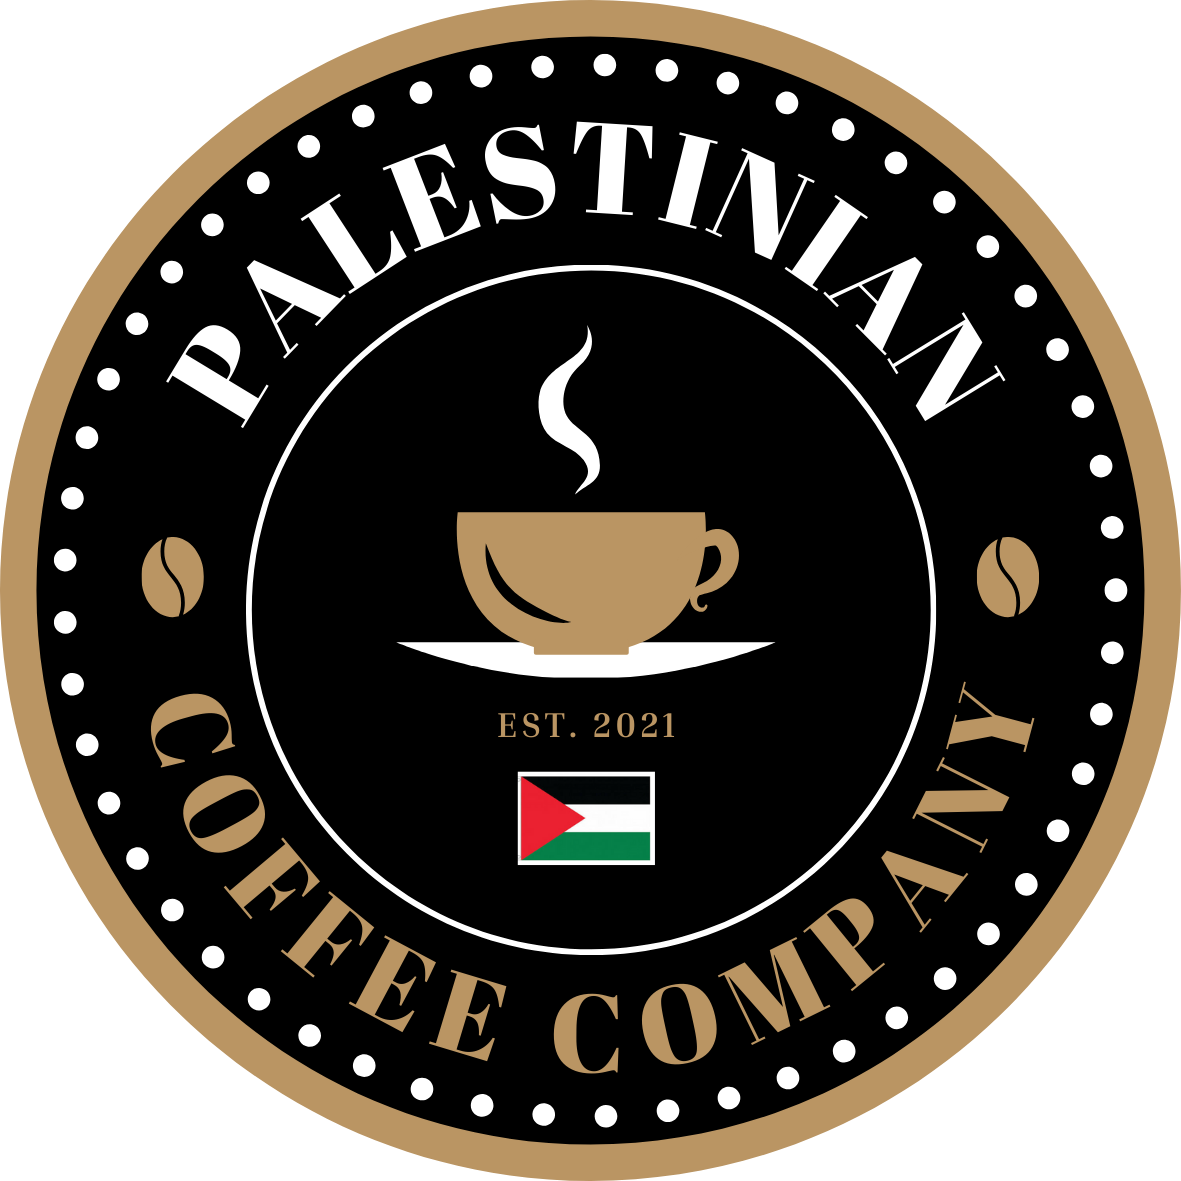 The Palestinian Coffee Company